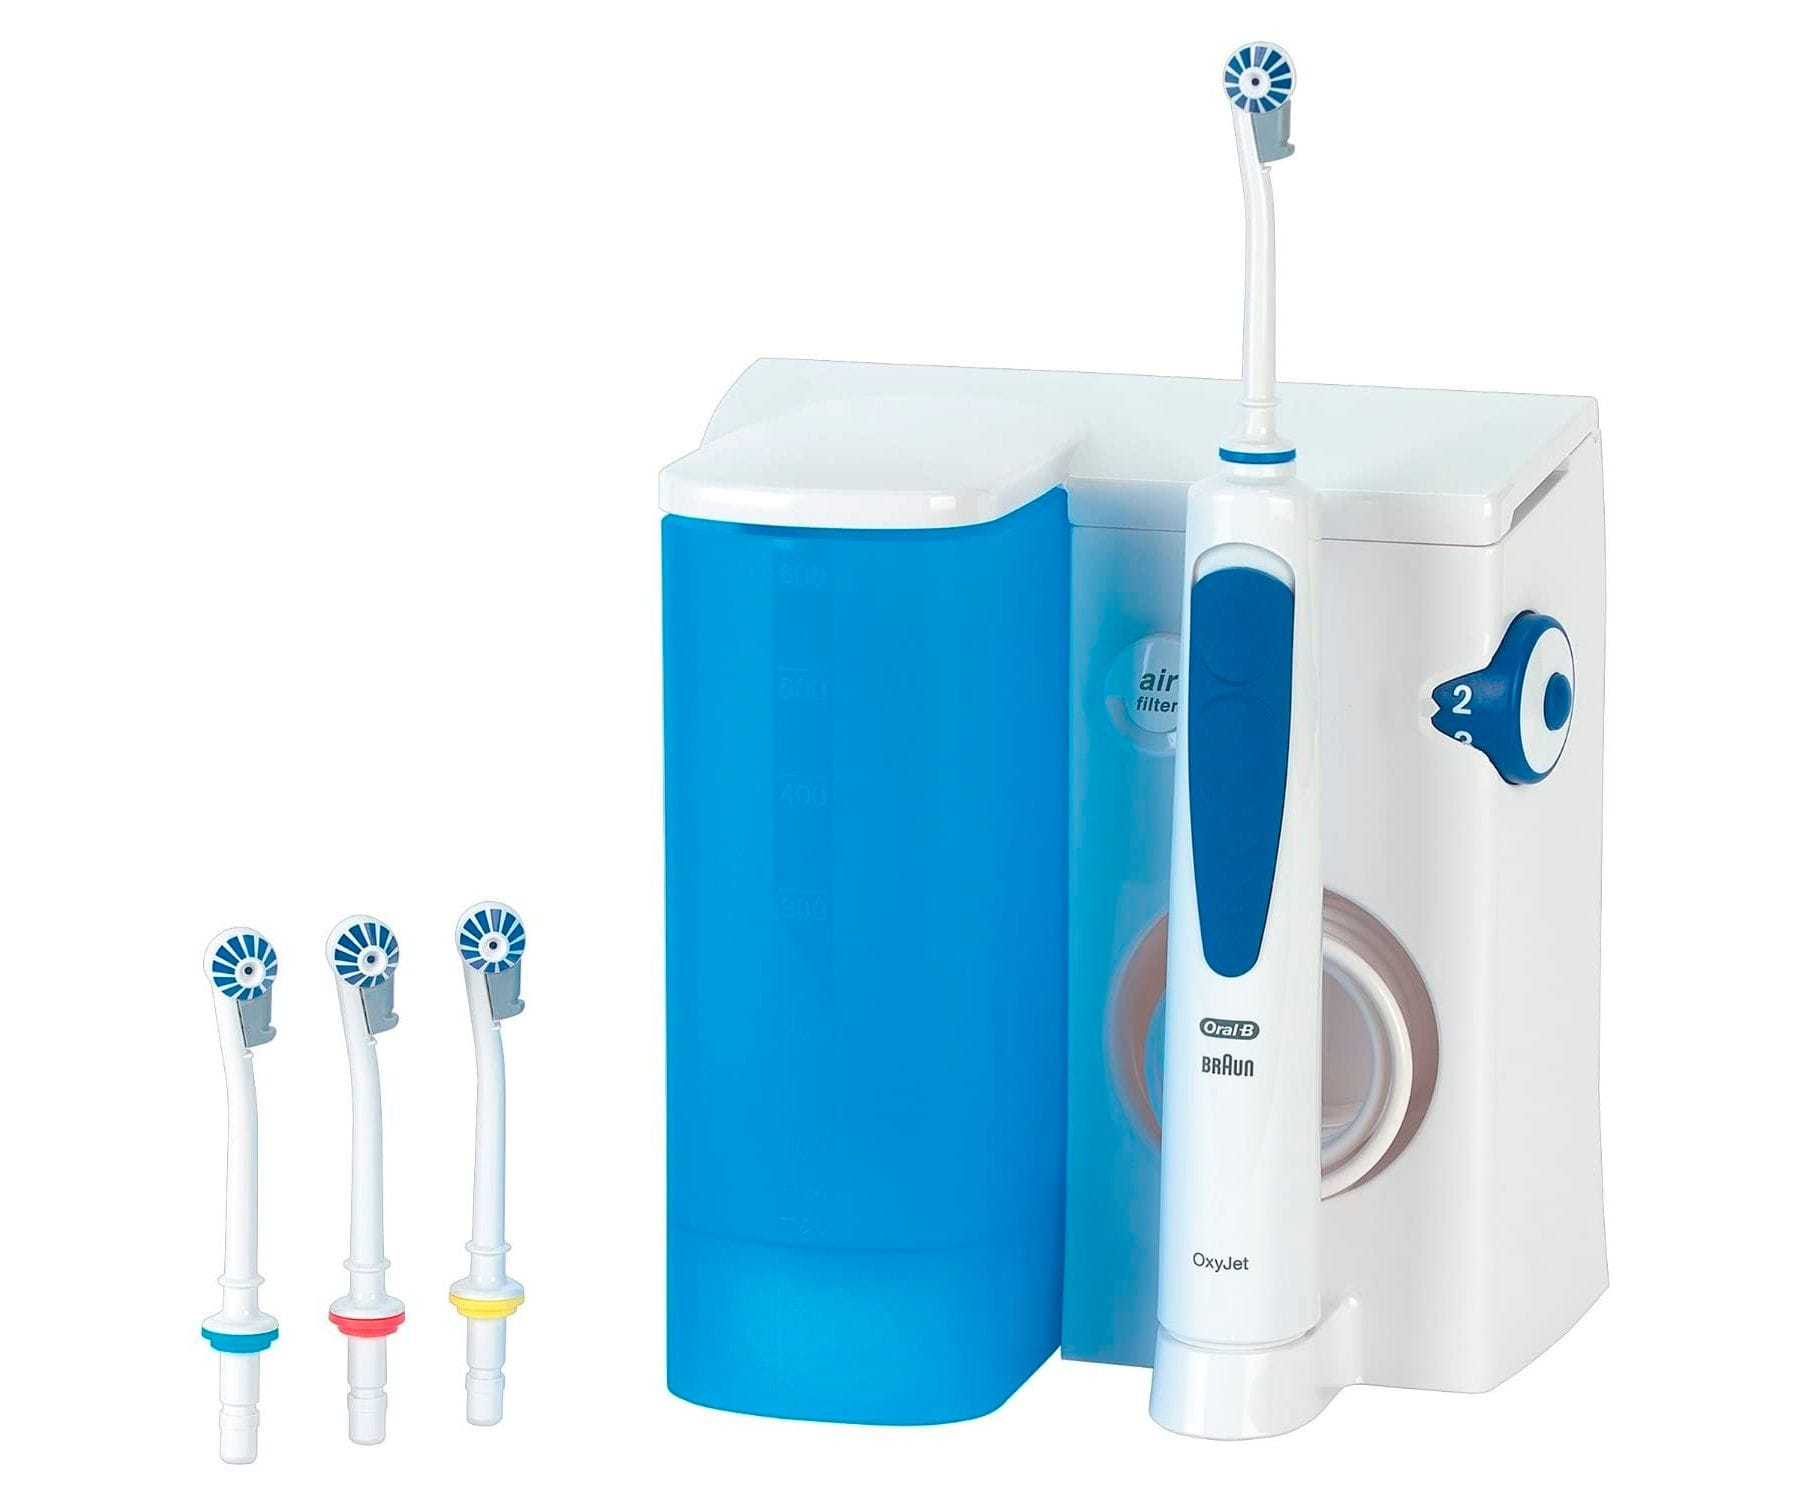 Procter Gamble Irrigador care oxyjet dental oralb md20 microburbujas braun professional md19 azul blanco cepillo dientes multi